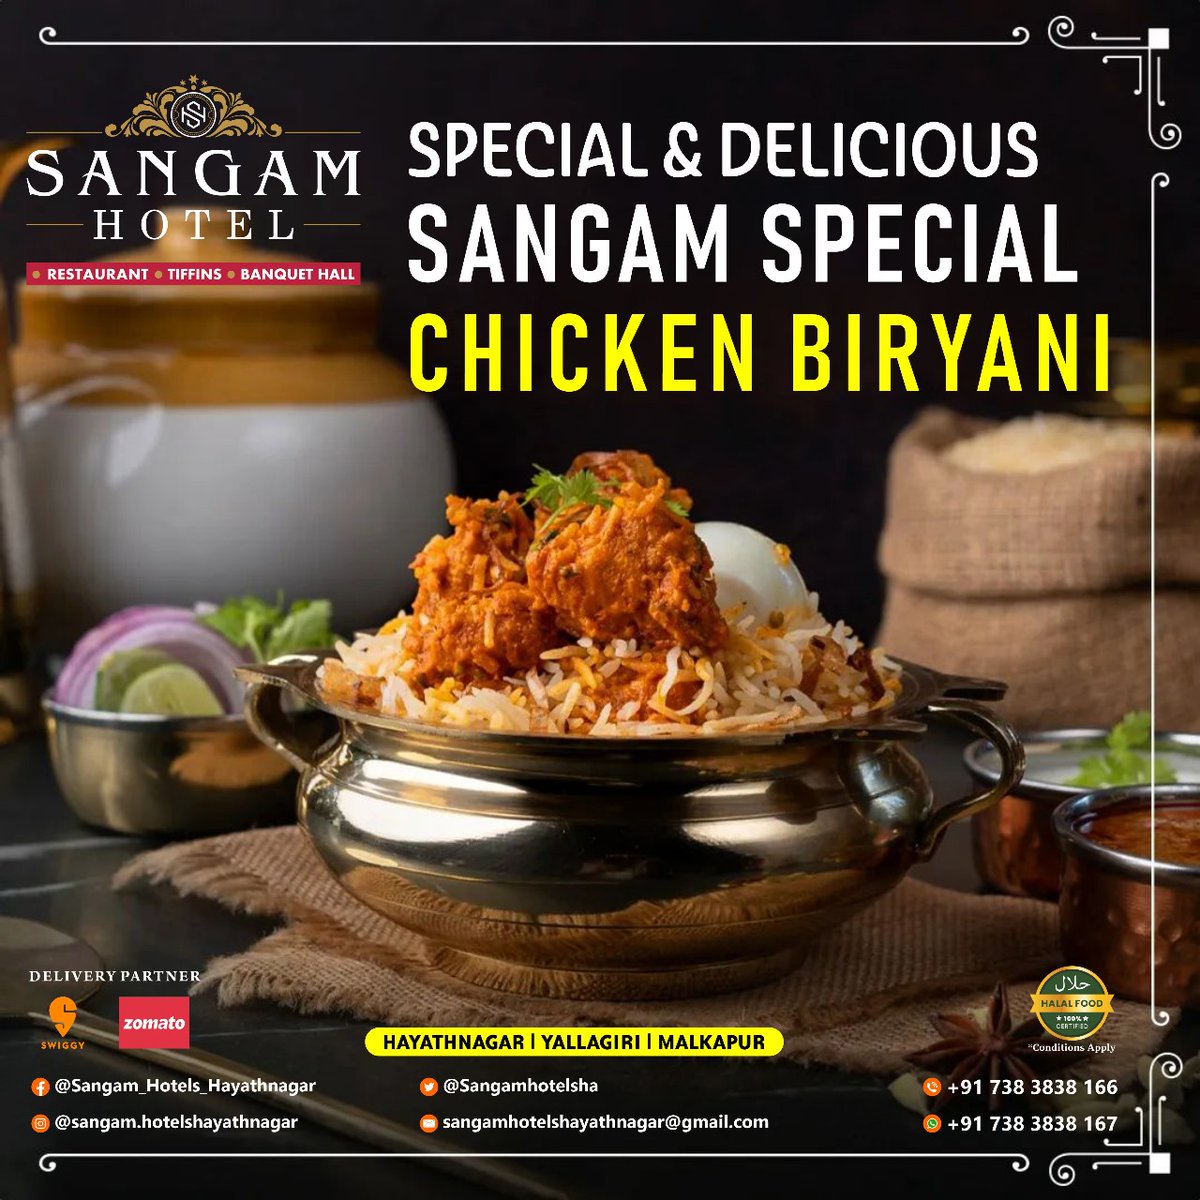 Sangam Special Chicken Biryani!!! @Sangamhotelsha

#chickenbiryani #biryani #chicken #foodie #biryanilovers #food #foodporn #indianfood #foodphotography #biryanilove #muttonbiryani #foodblogger #foodlover #foodstagram #instafood #yummy #foodies #foodgasm #biryanilover